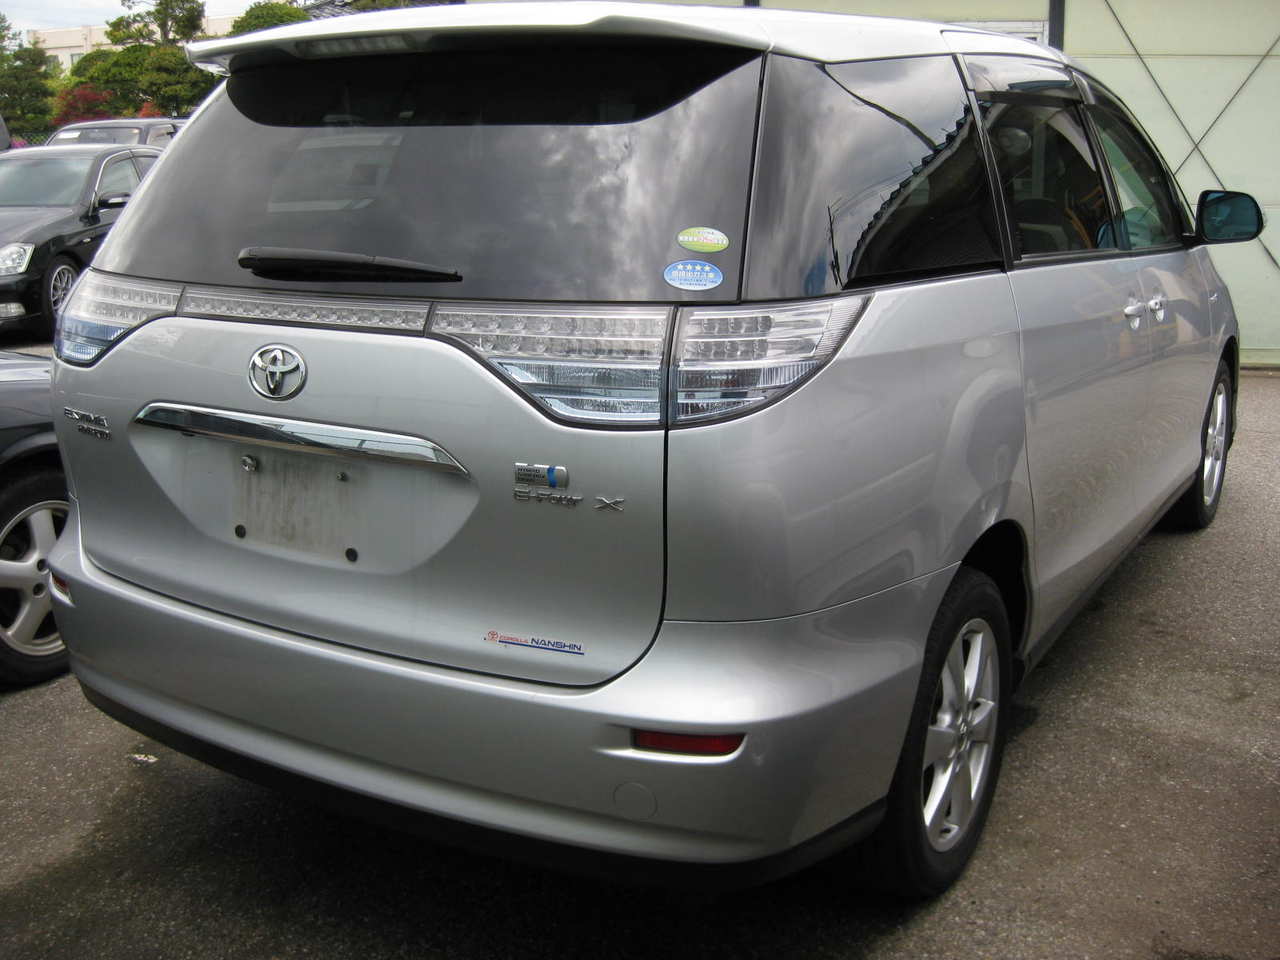 Estima hybrid. Toyota Estima Hybrid 2008. Тайота истимс 2008гибрид. Toyota Estima Hybrid 2011. Toyota Estima Hybrid 2006.